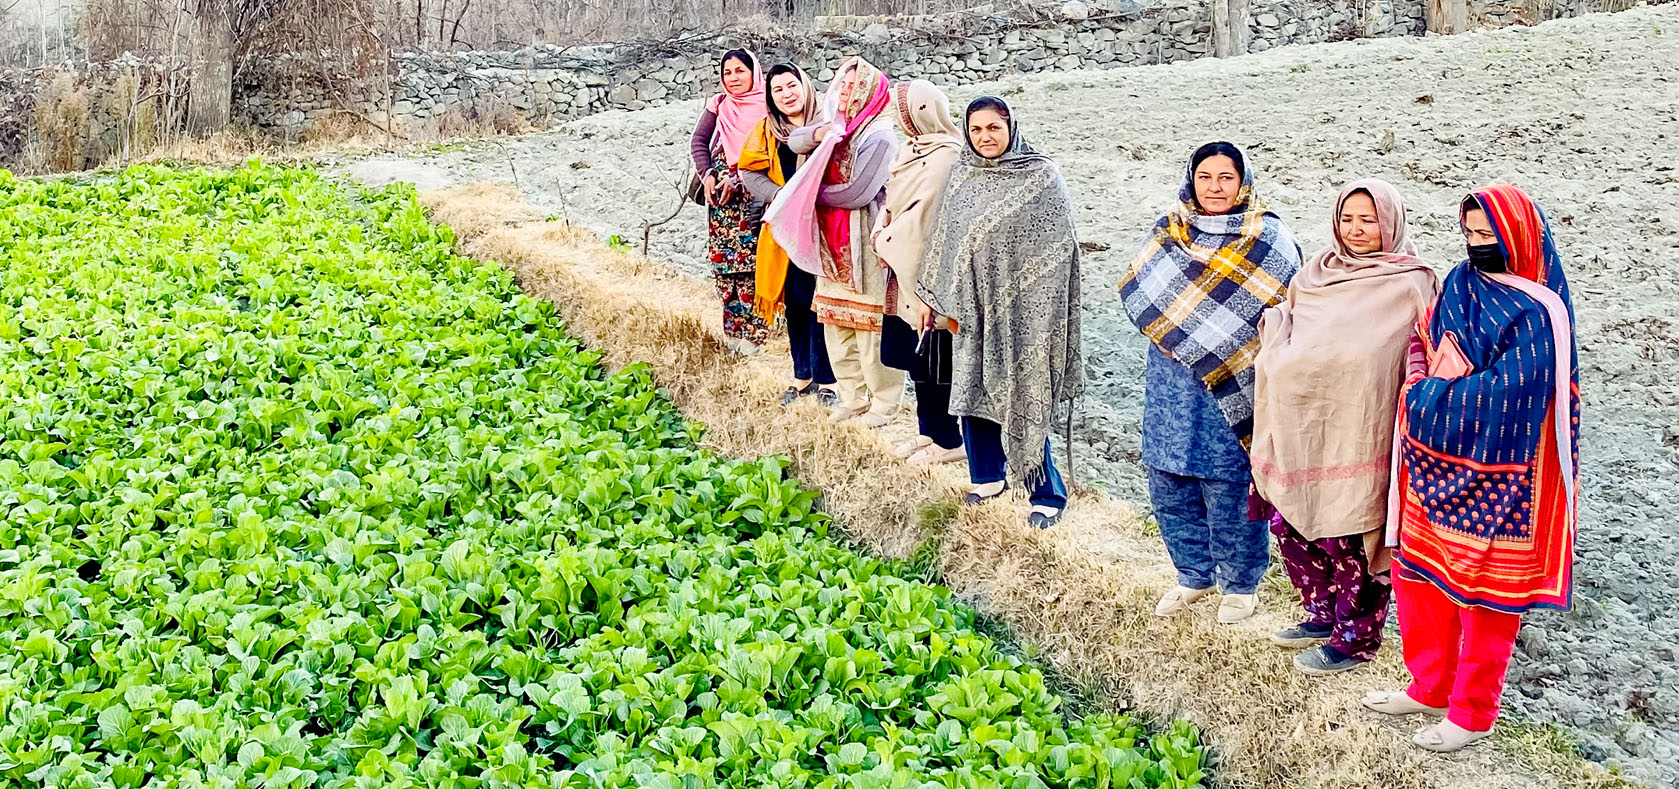 UN Women partner, Soni Jawari Public Policy Center (SJPPC), works with women farmers to ensure women economic empowerment in Gilgit Baltistan. Photo: UN Women